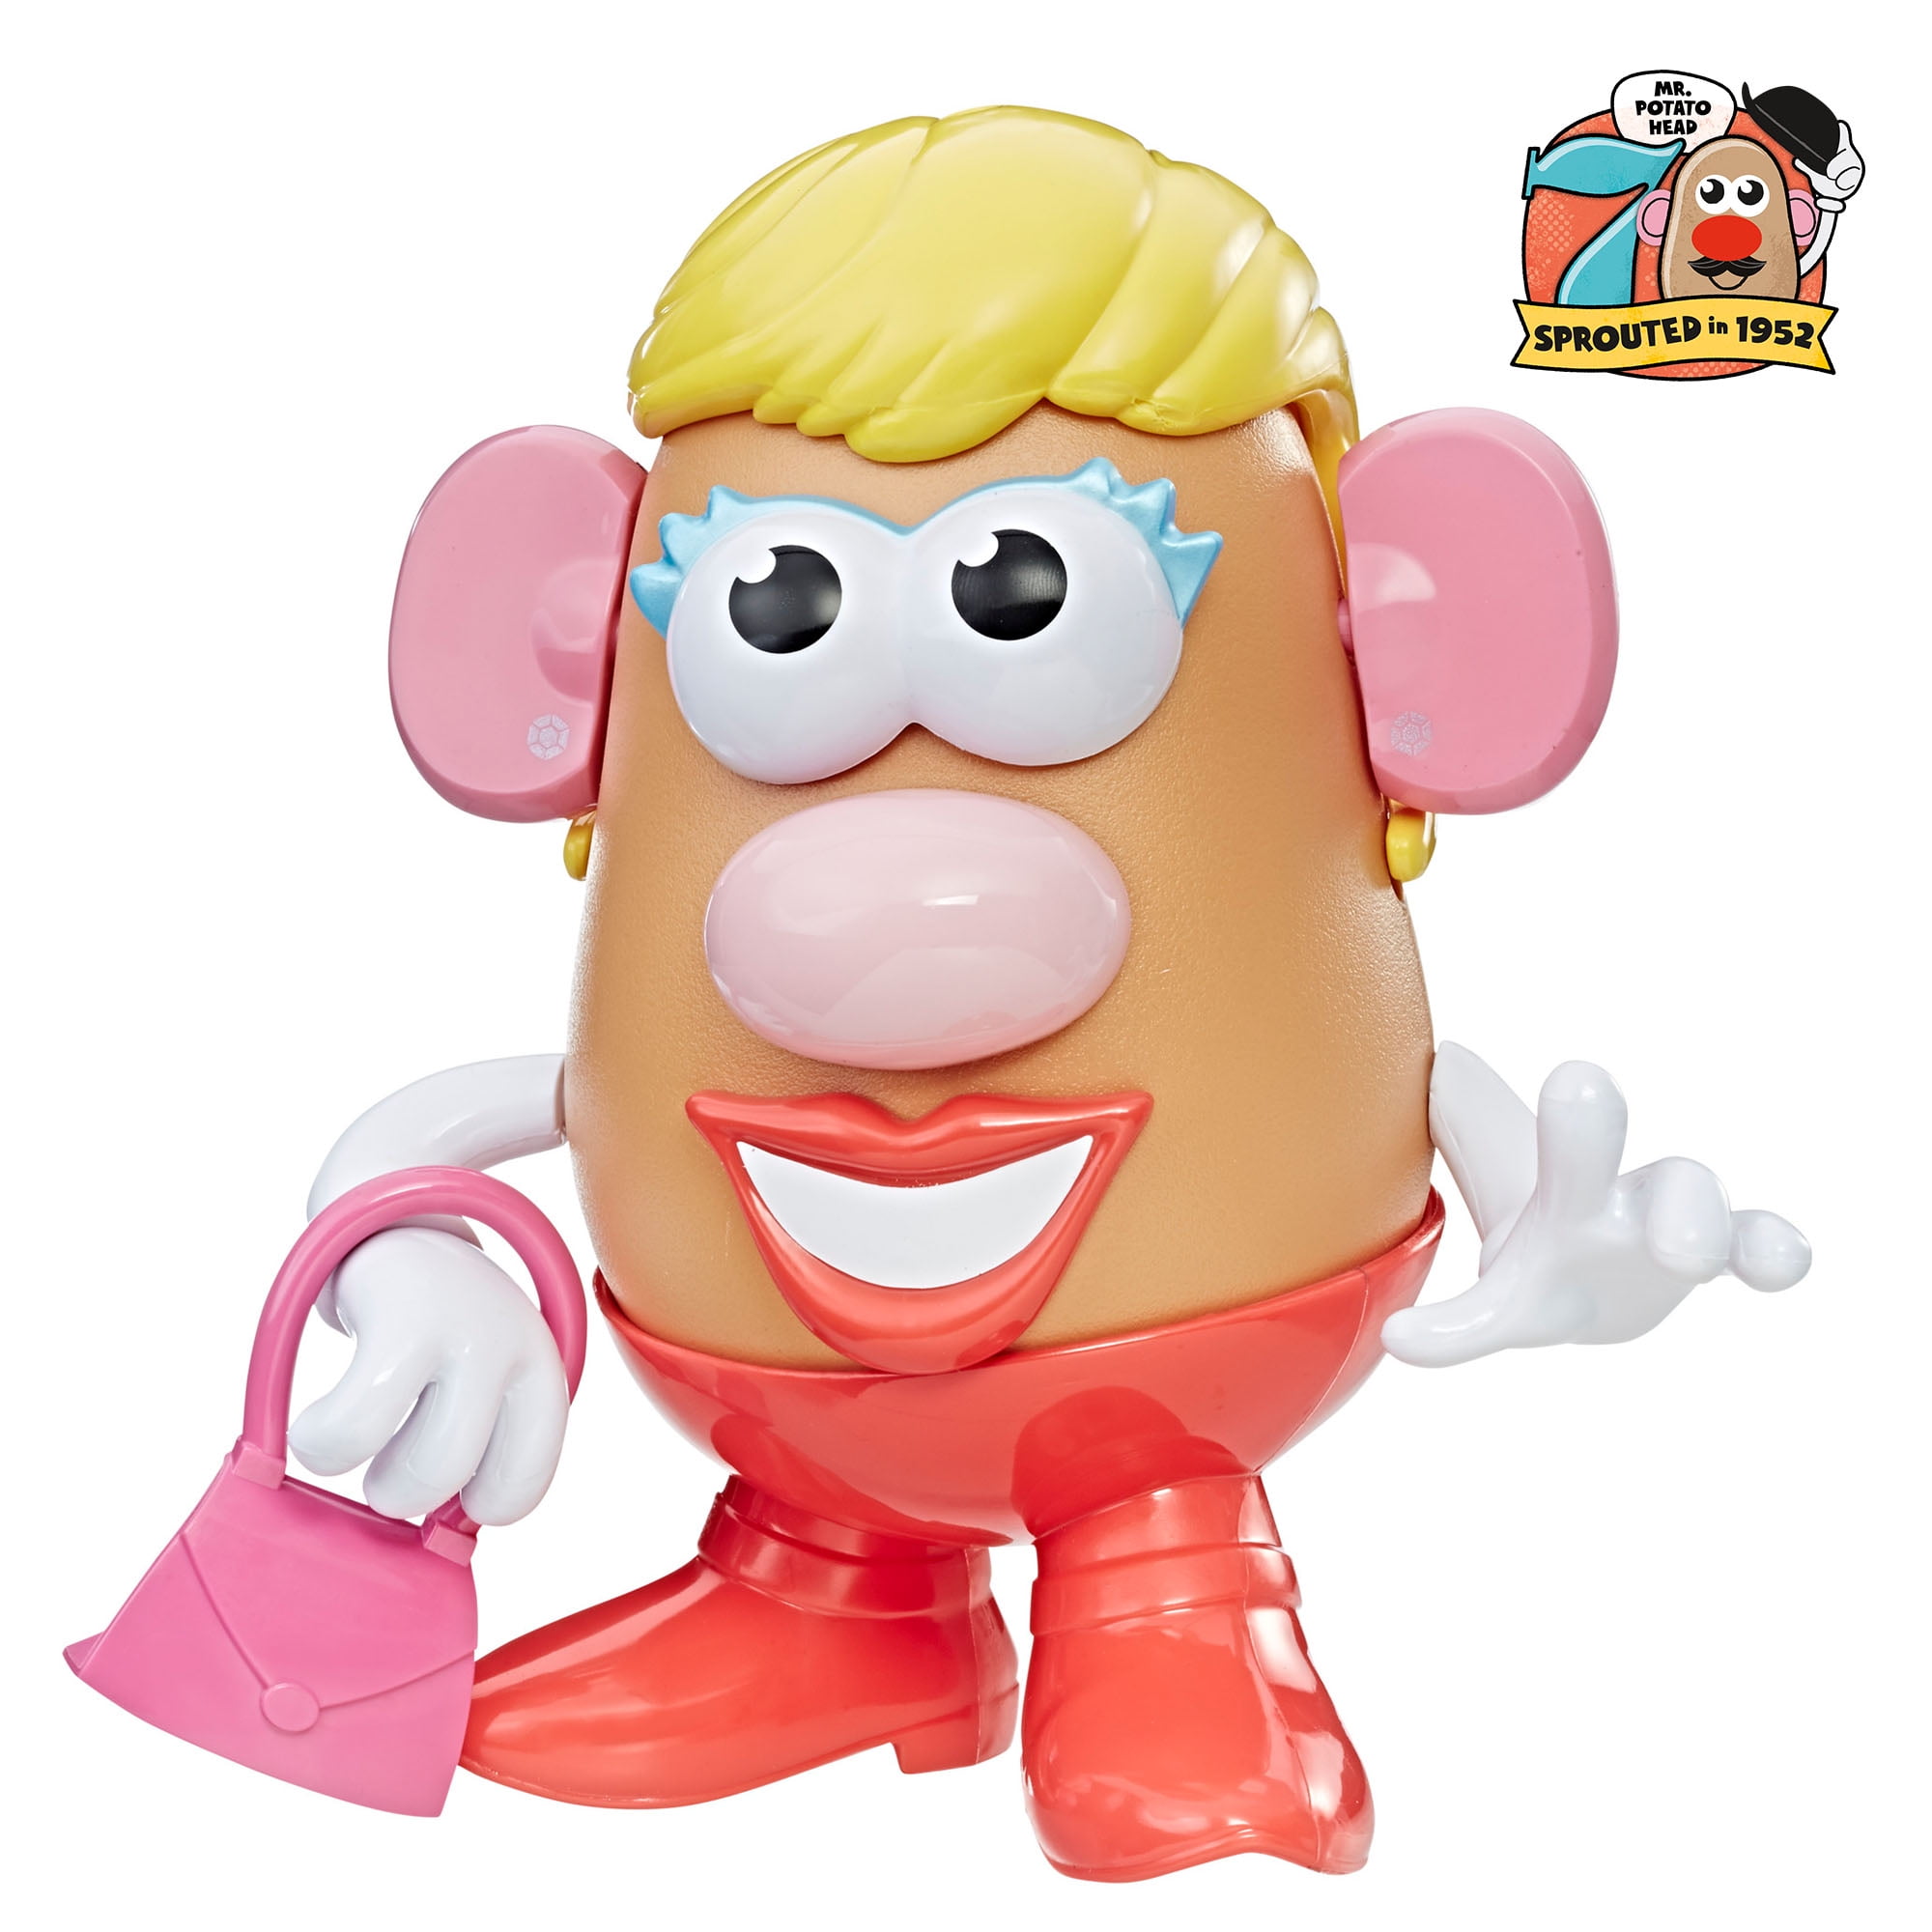 Potato Head Toy Playskool Mrs 27658ES0 for sale online 